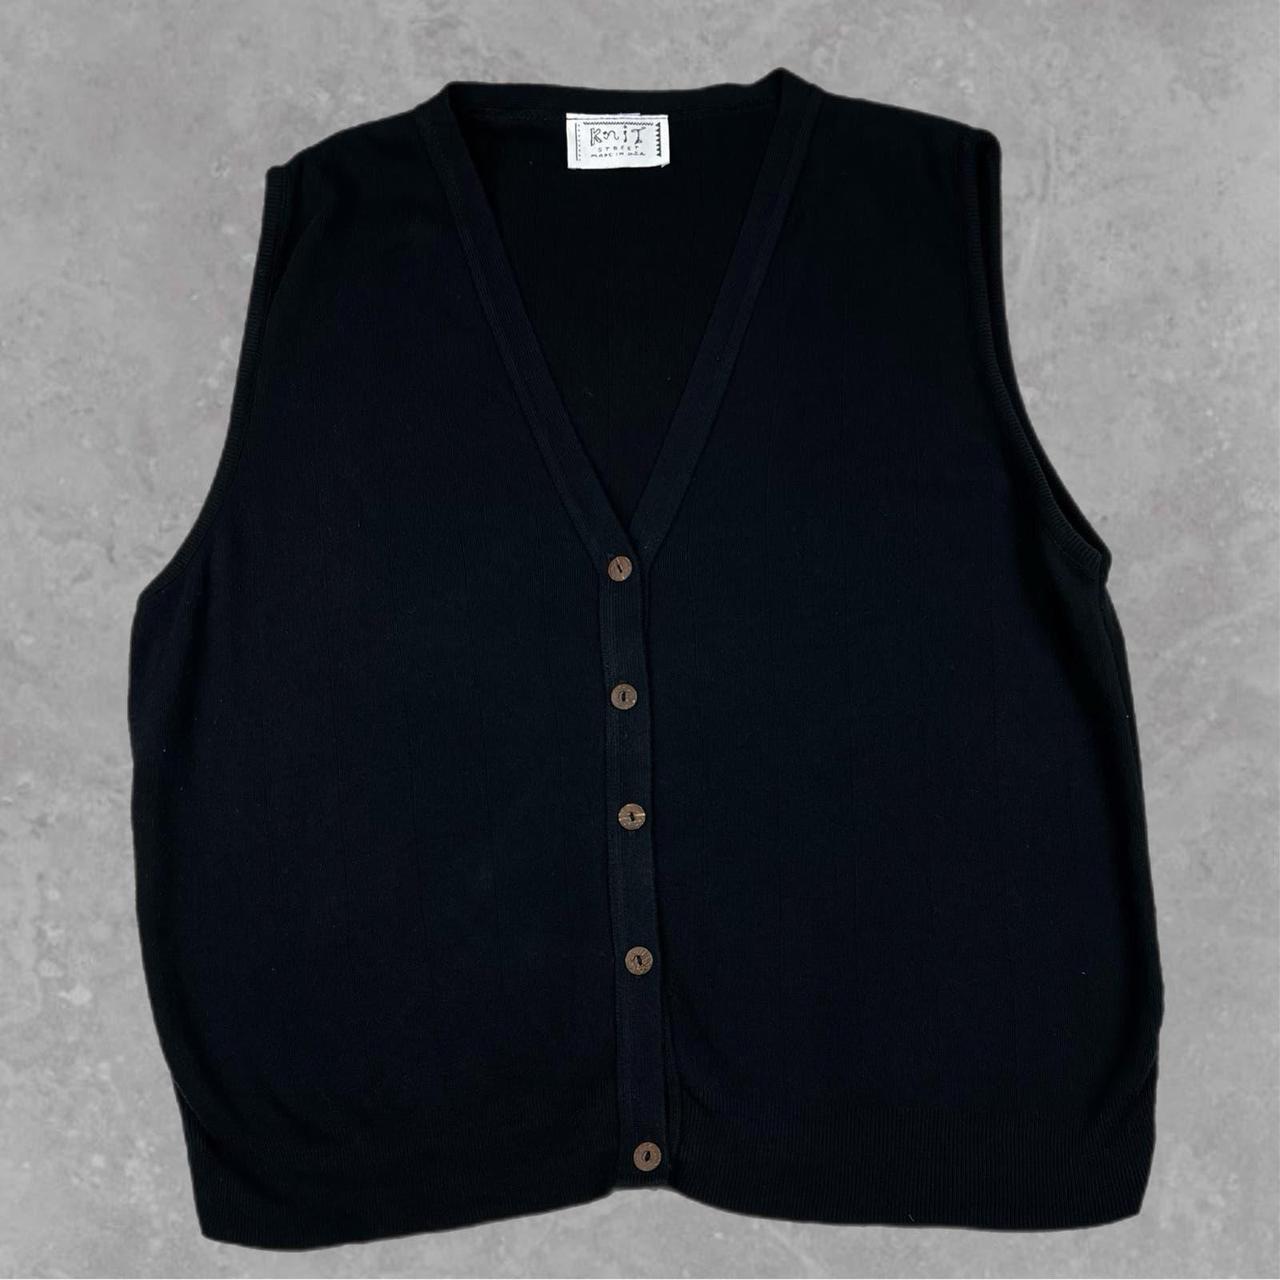 Black Knit Street Sweater Vest Size XL About this... - Depop